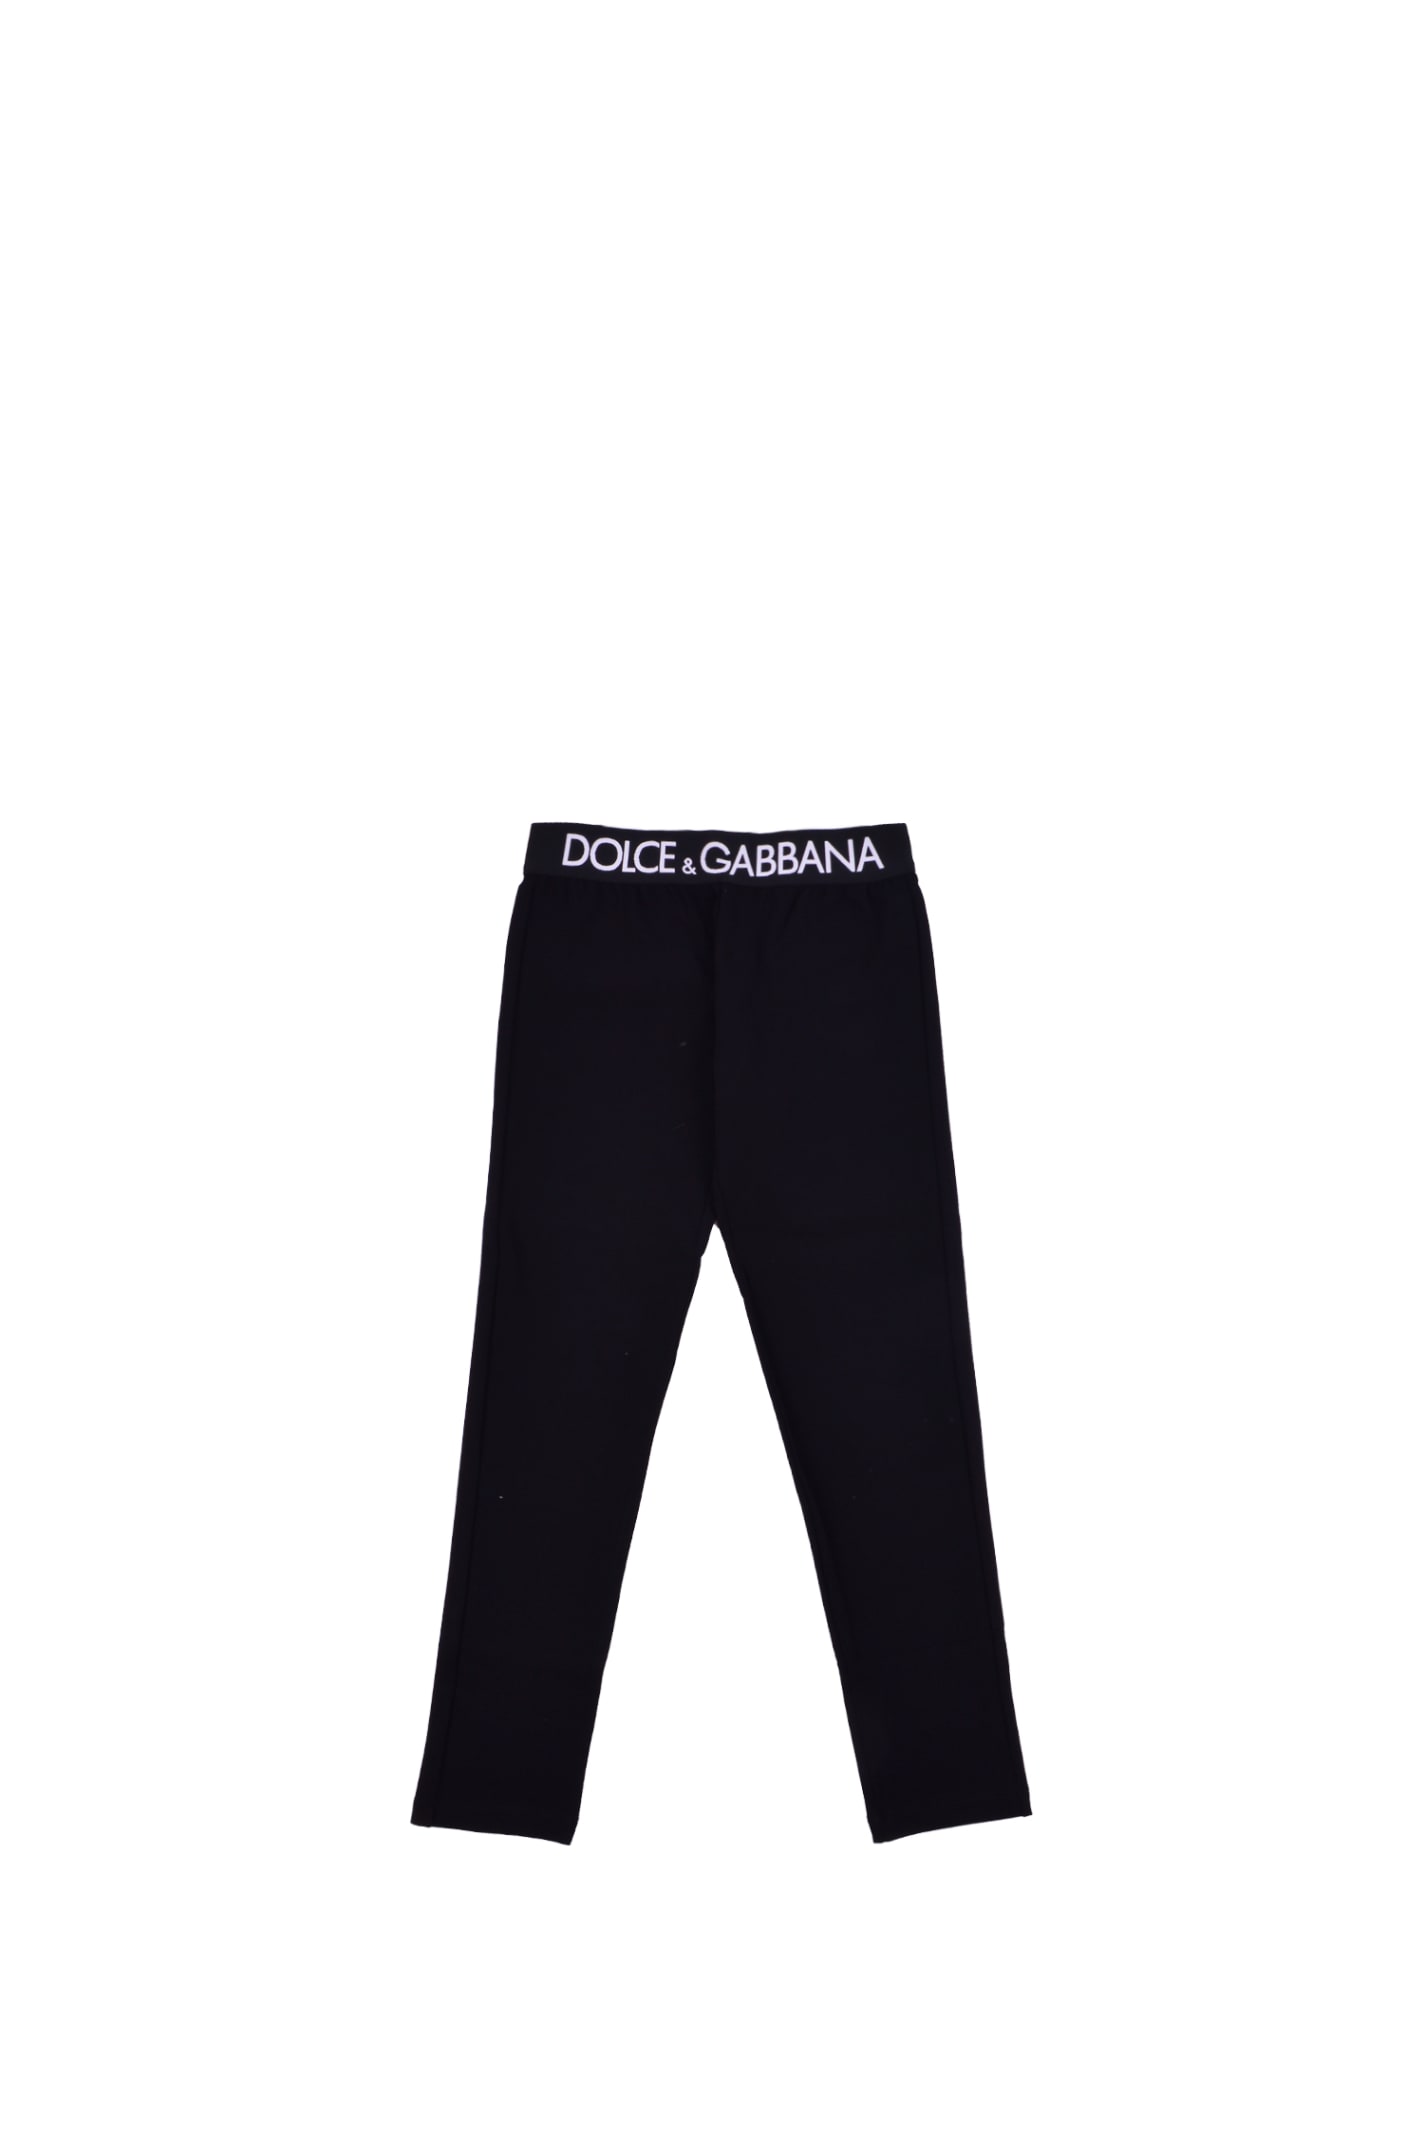 Dolce & Gabbana Interlock Leggings With Logoed Elastic